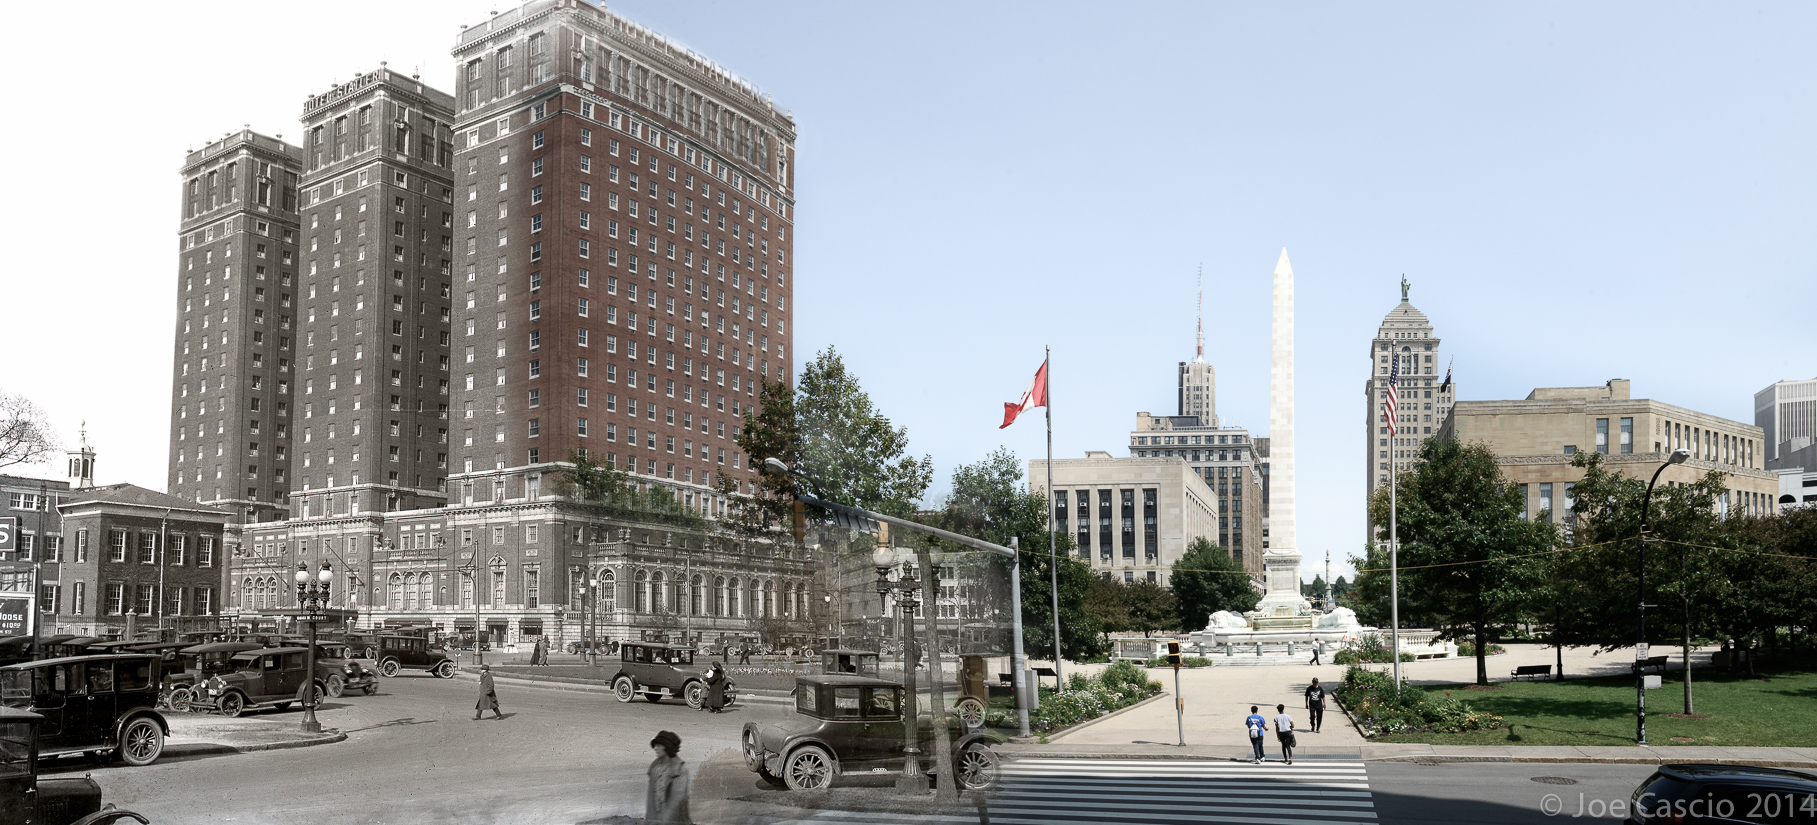 Hotel_Statler_Niagara_Square_1927-2014_02.65.jpg